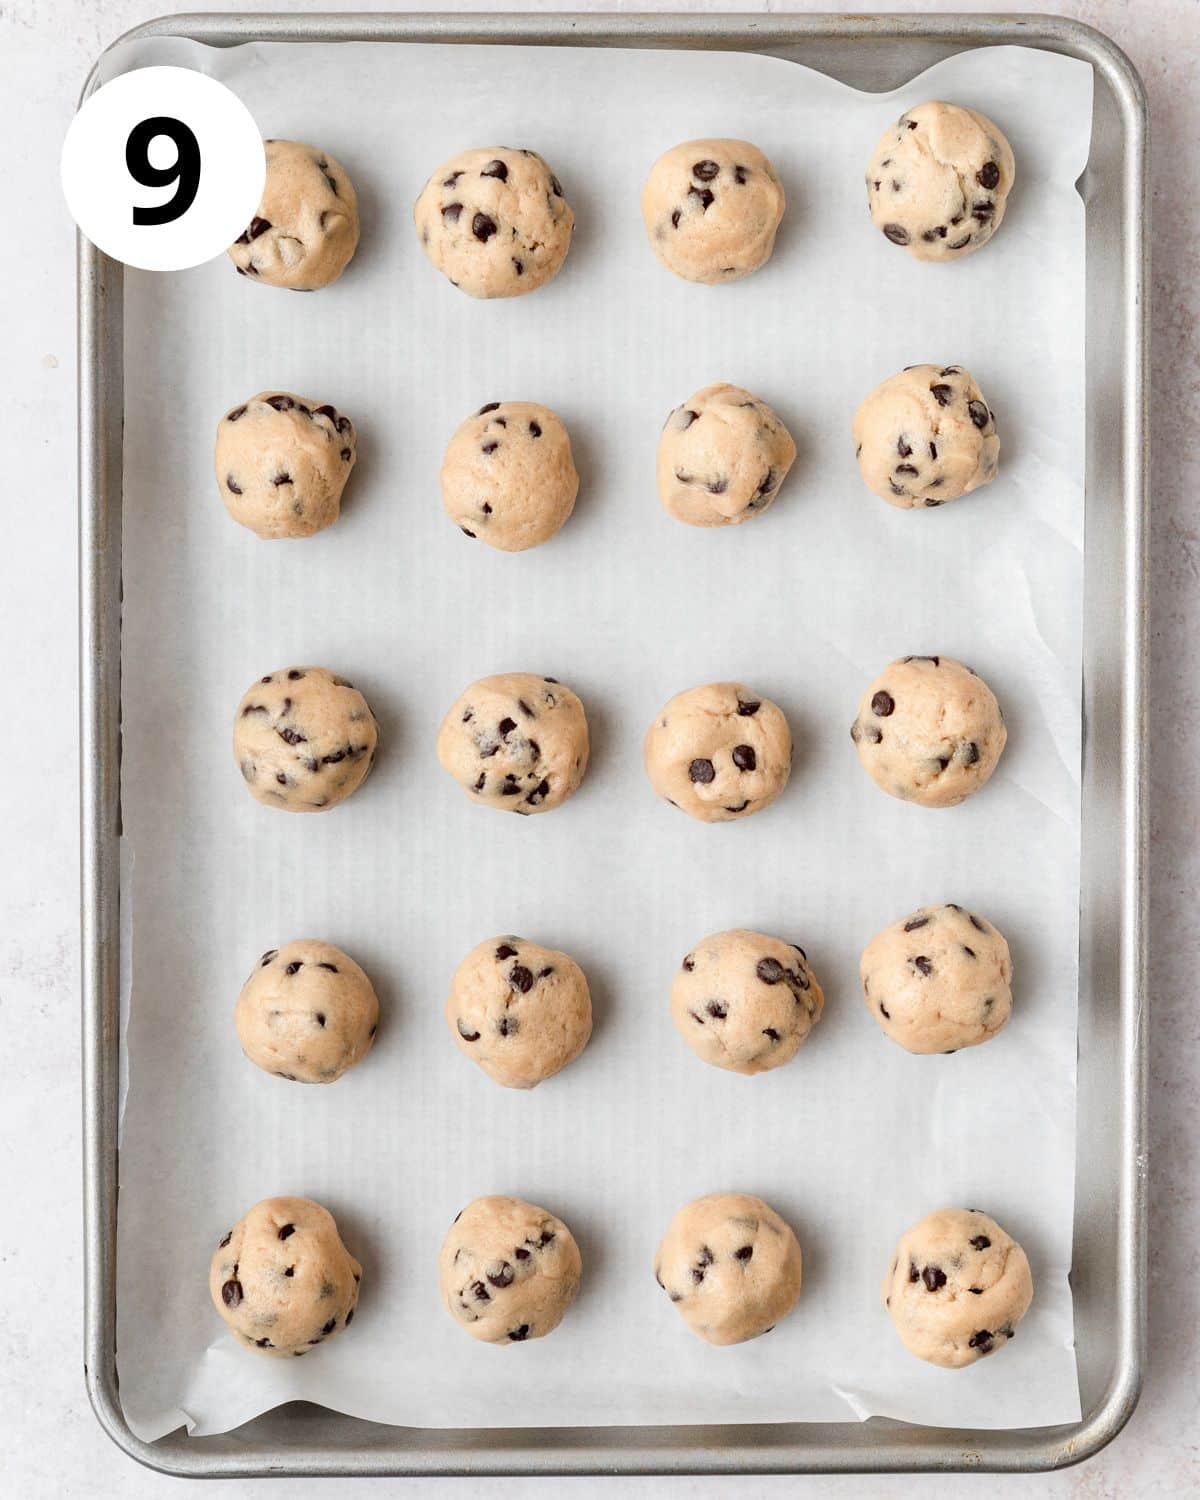 rolling edible cookie dough into small balls.